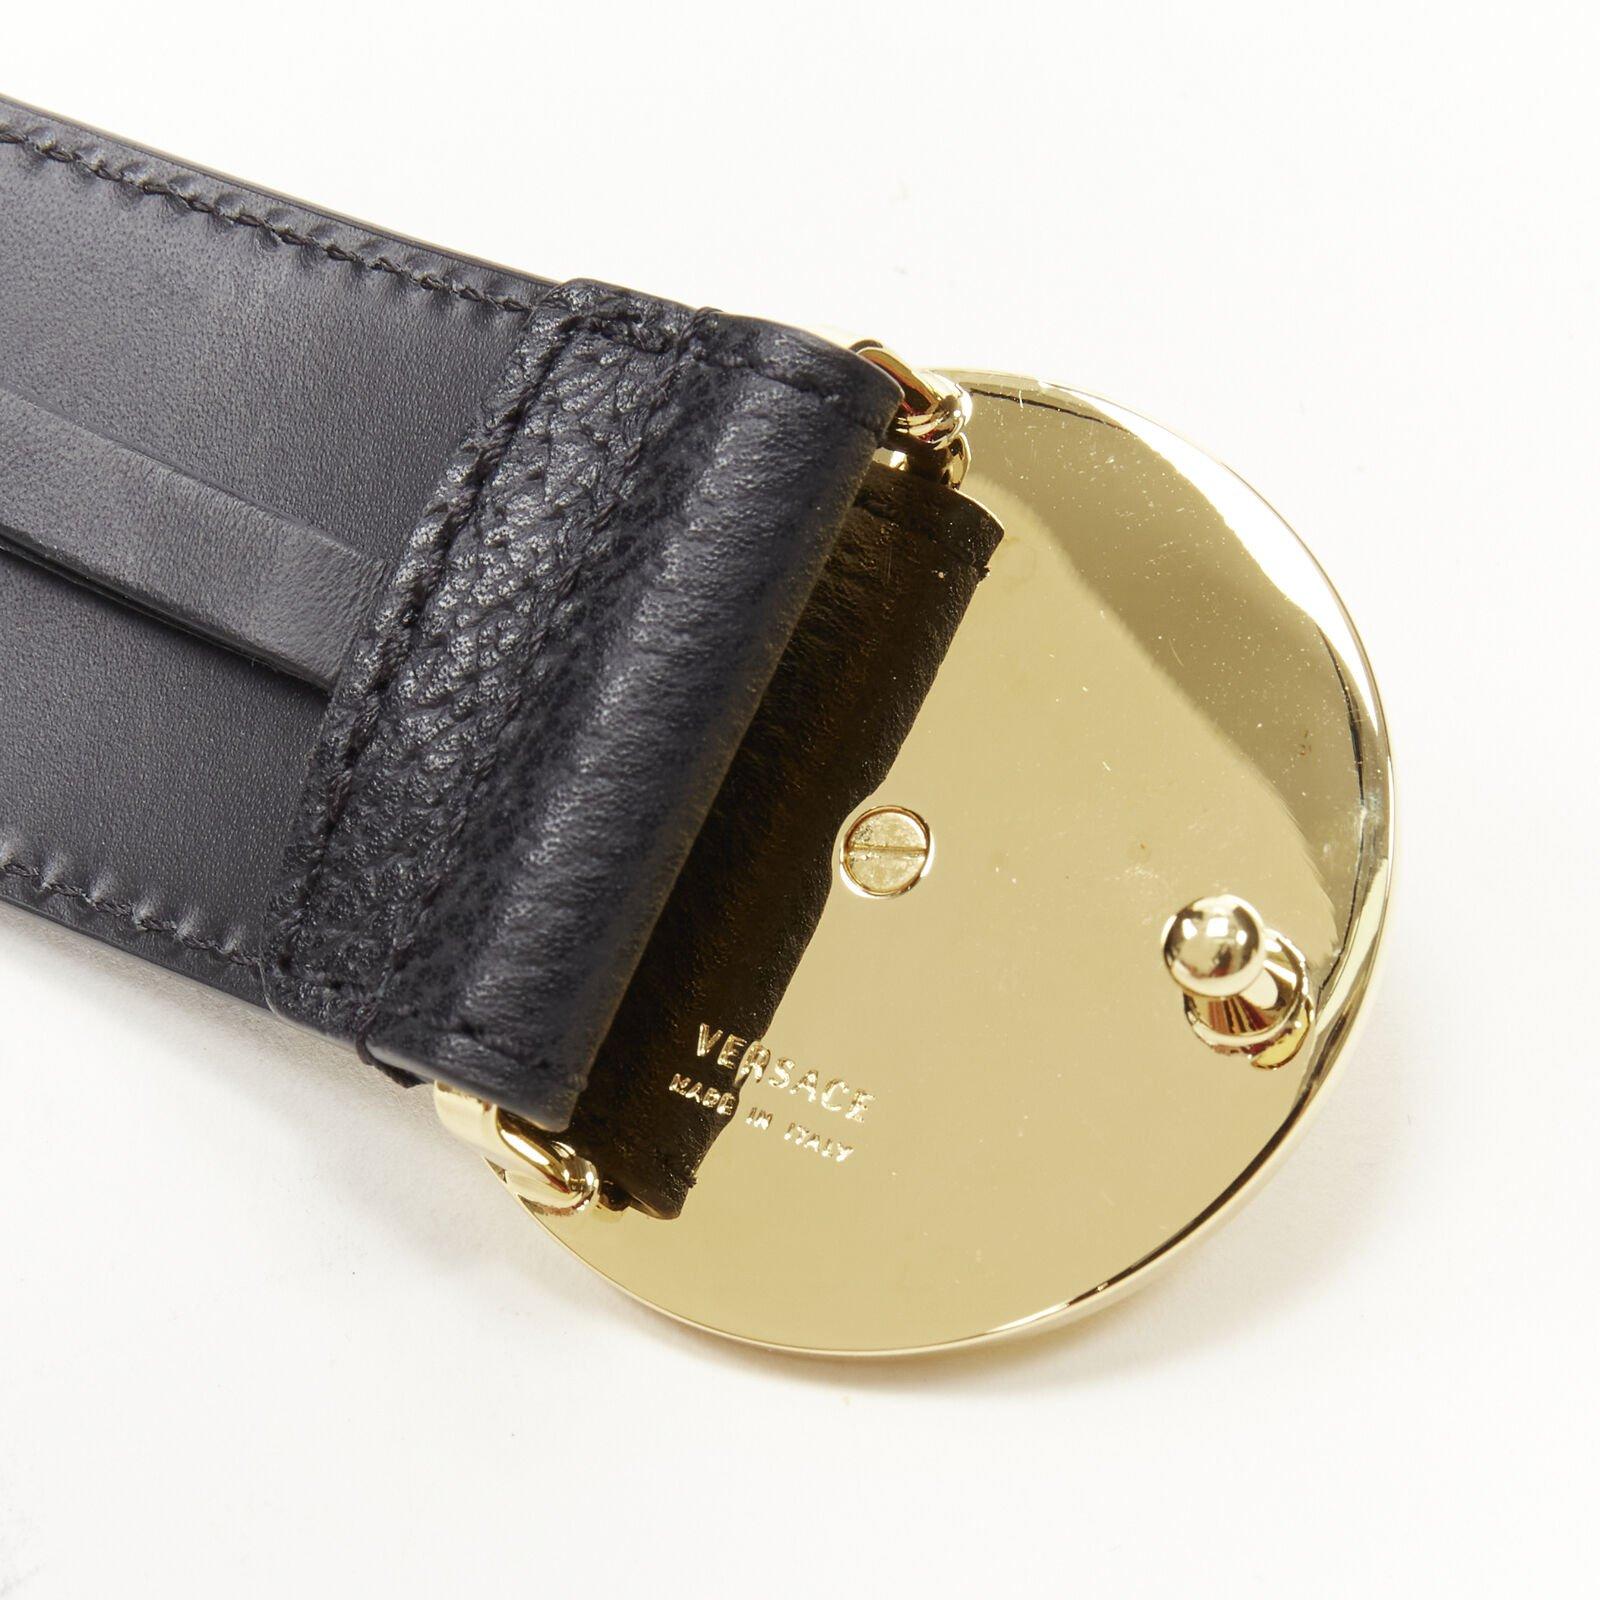 VERSACE Medusa Medallion Coin gold buckle black leather belt 115cm 44-48